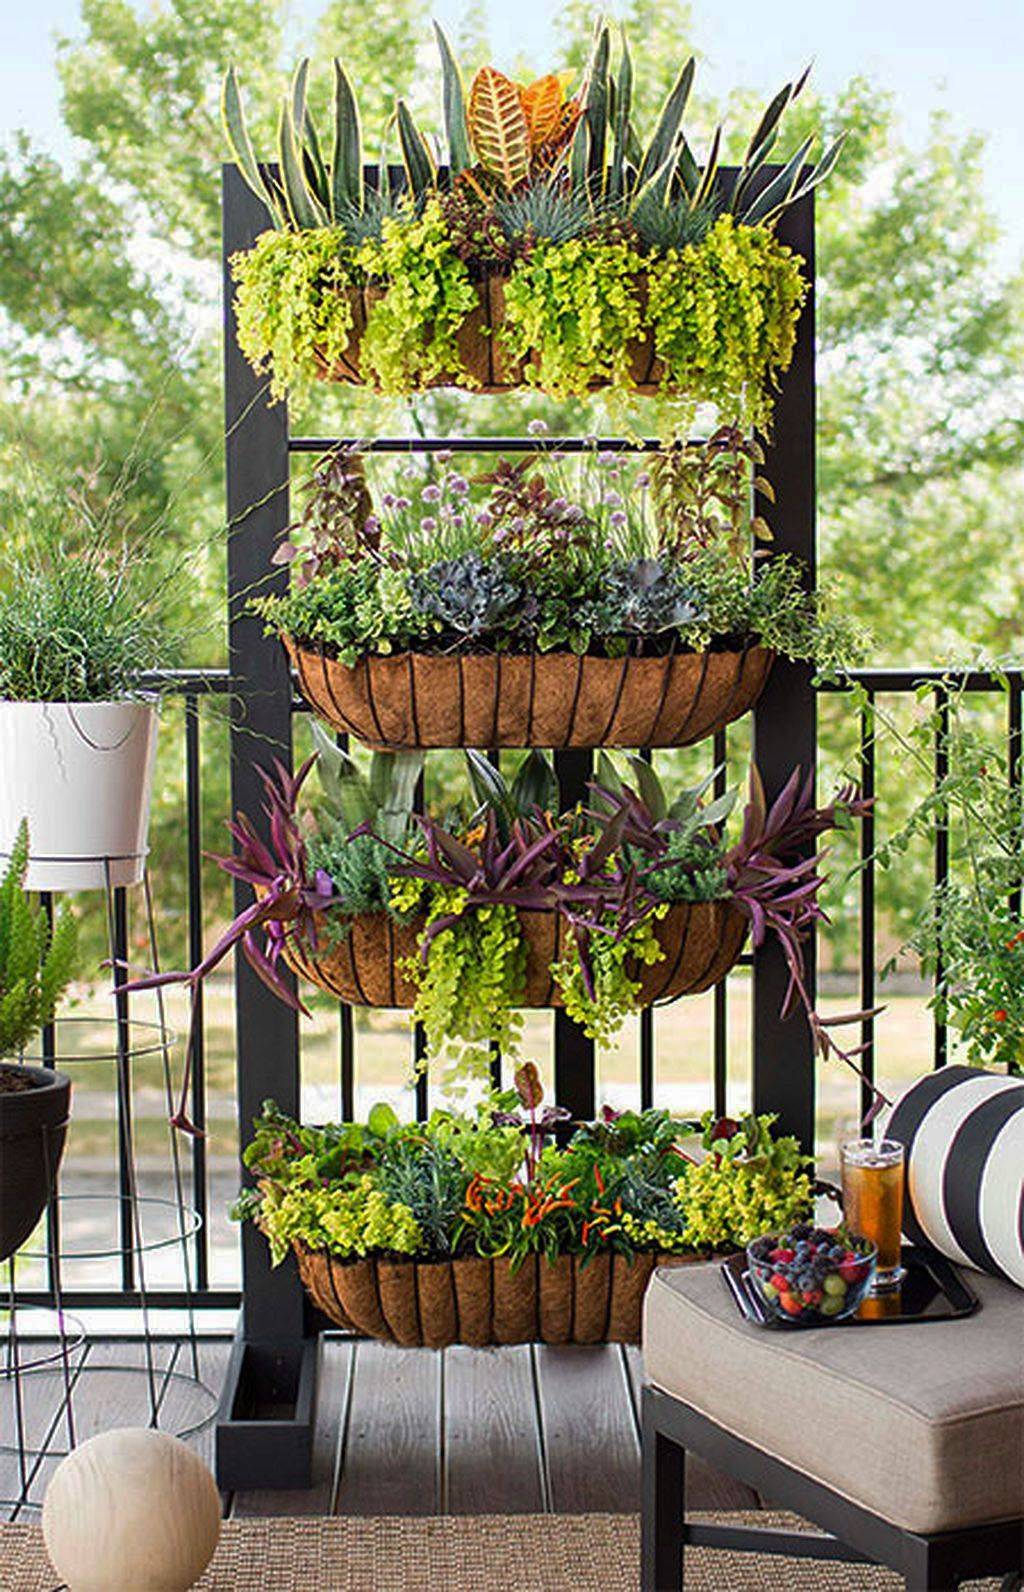 Vertical Herb Garden Ideas